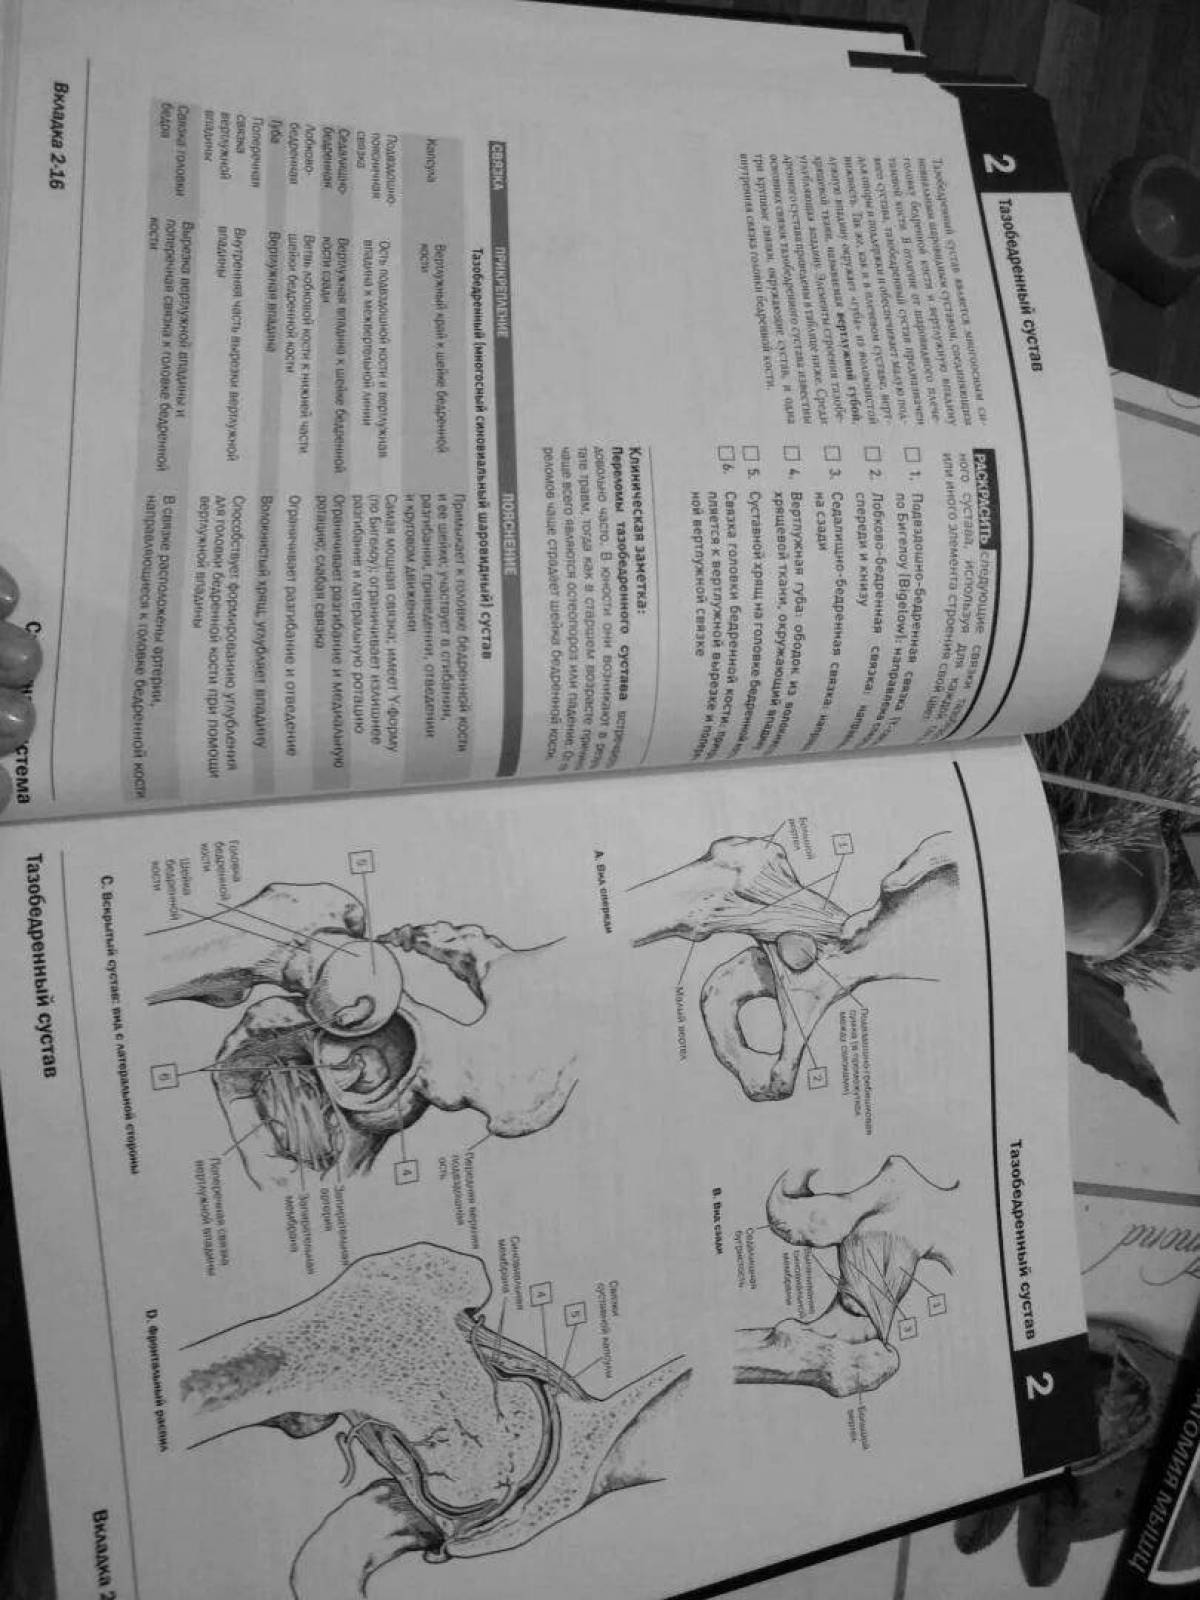 Fun coloring book of Netter's Anatomy Atlas